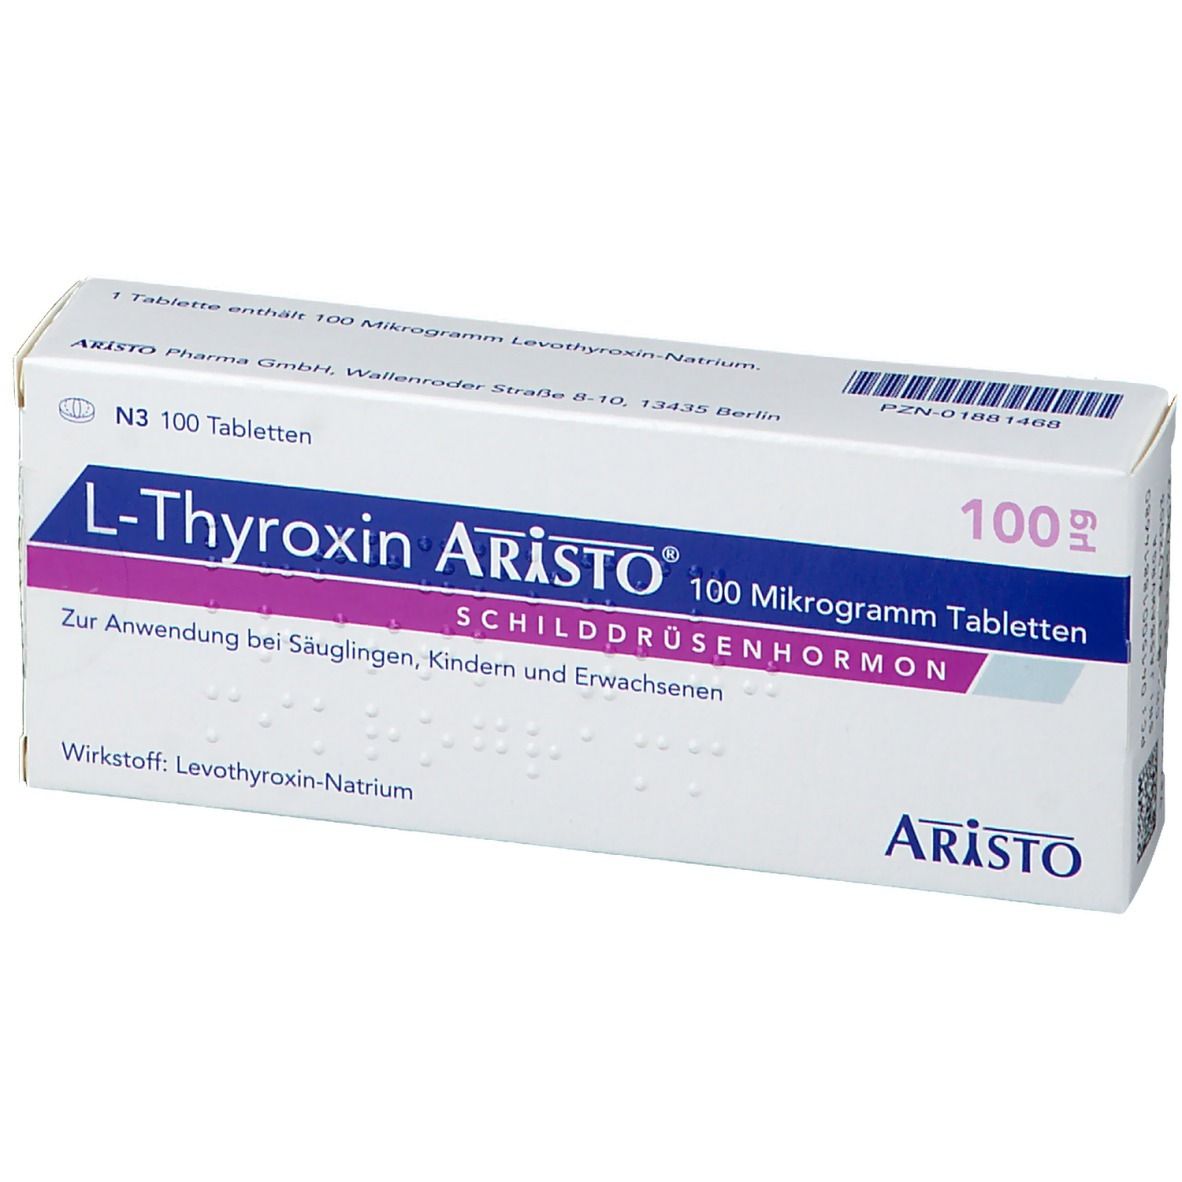 L-Thyroxin Aristo® 100 µg